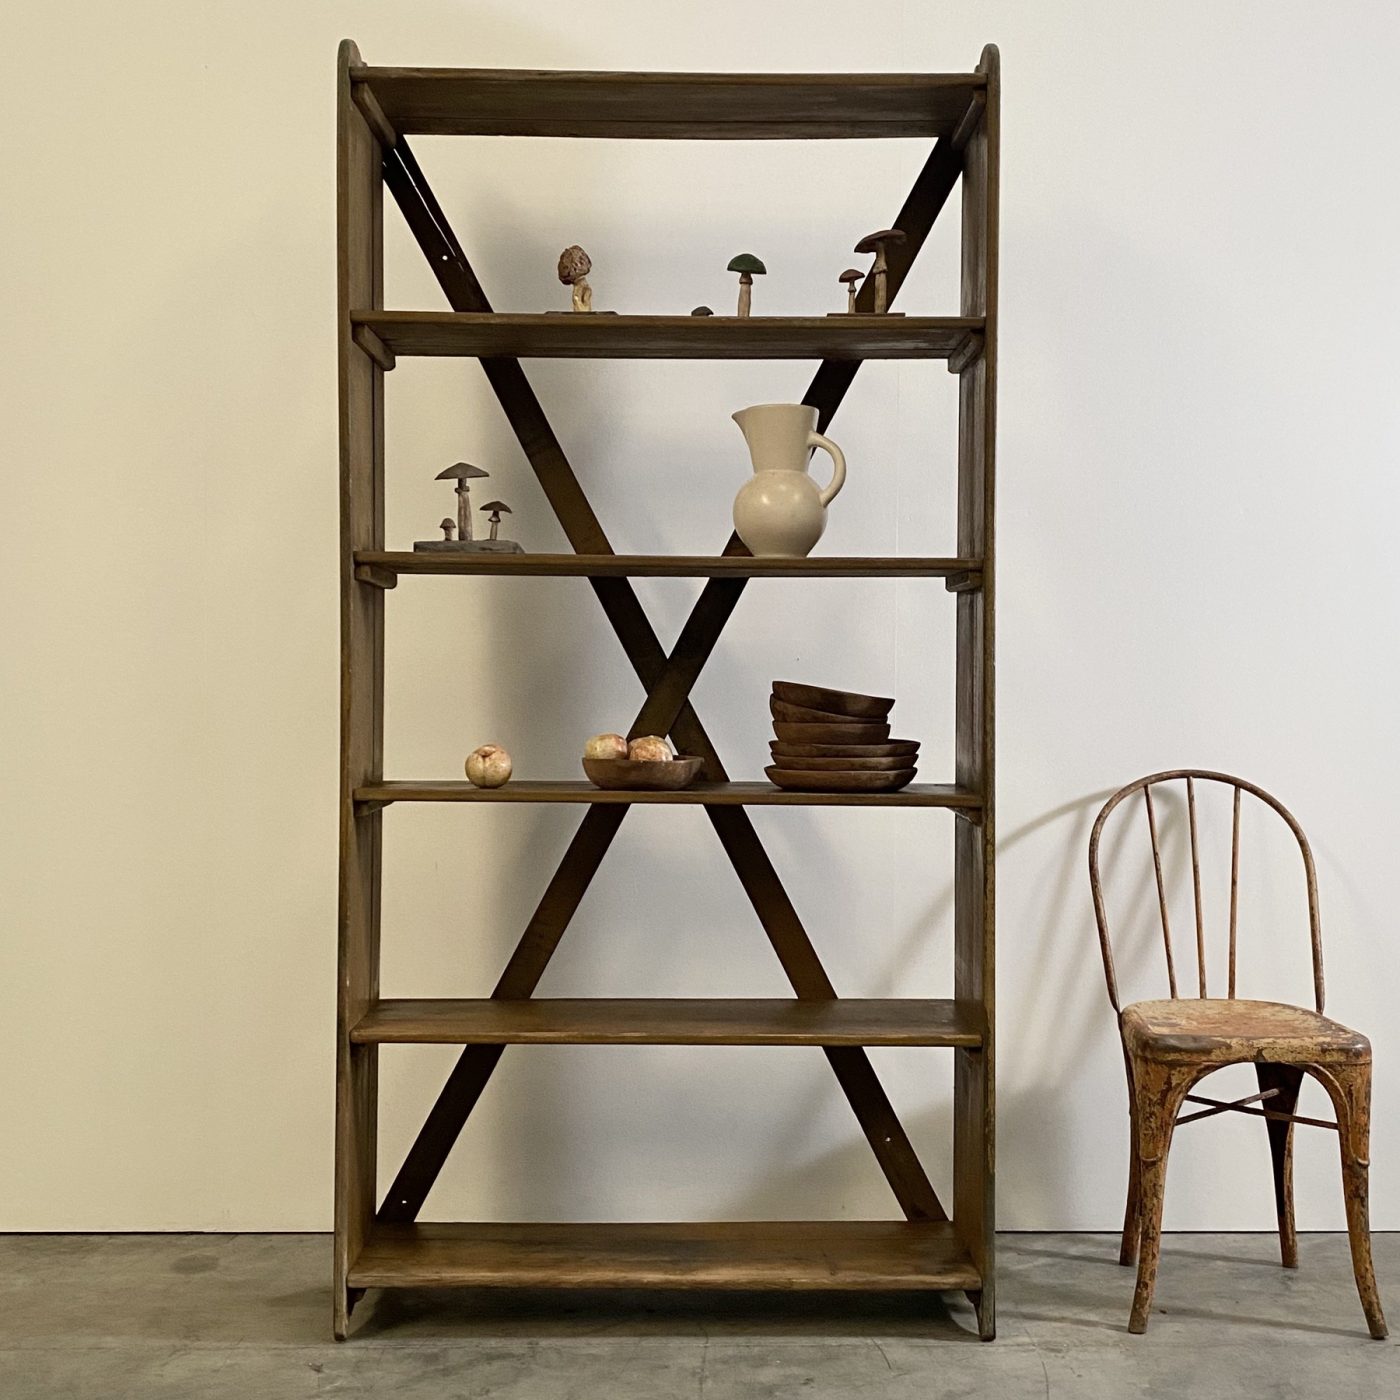 objet-vagabond-wooden-shelf0006